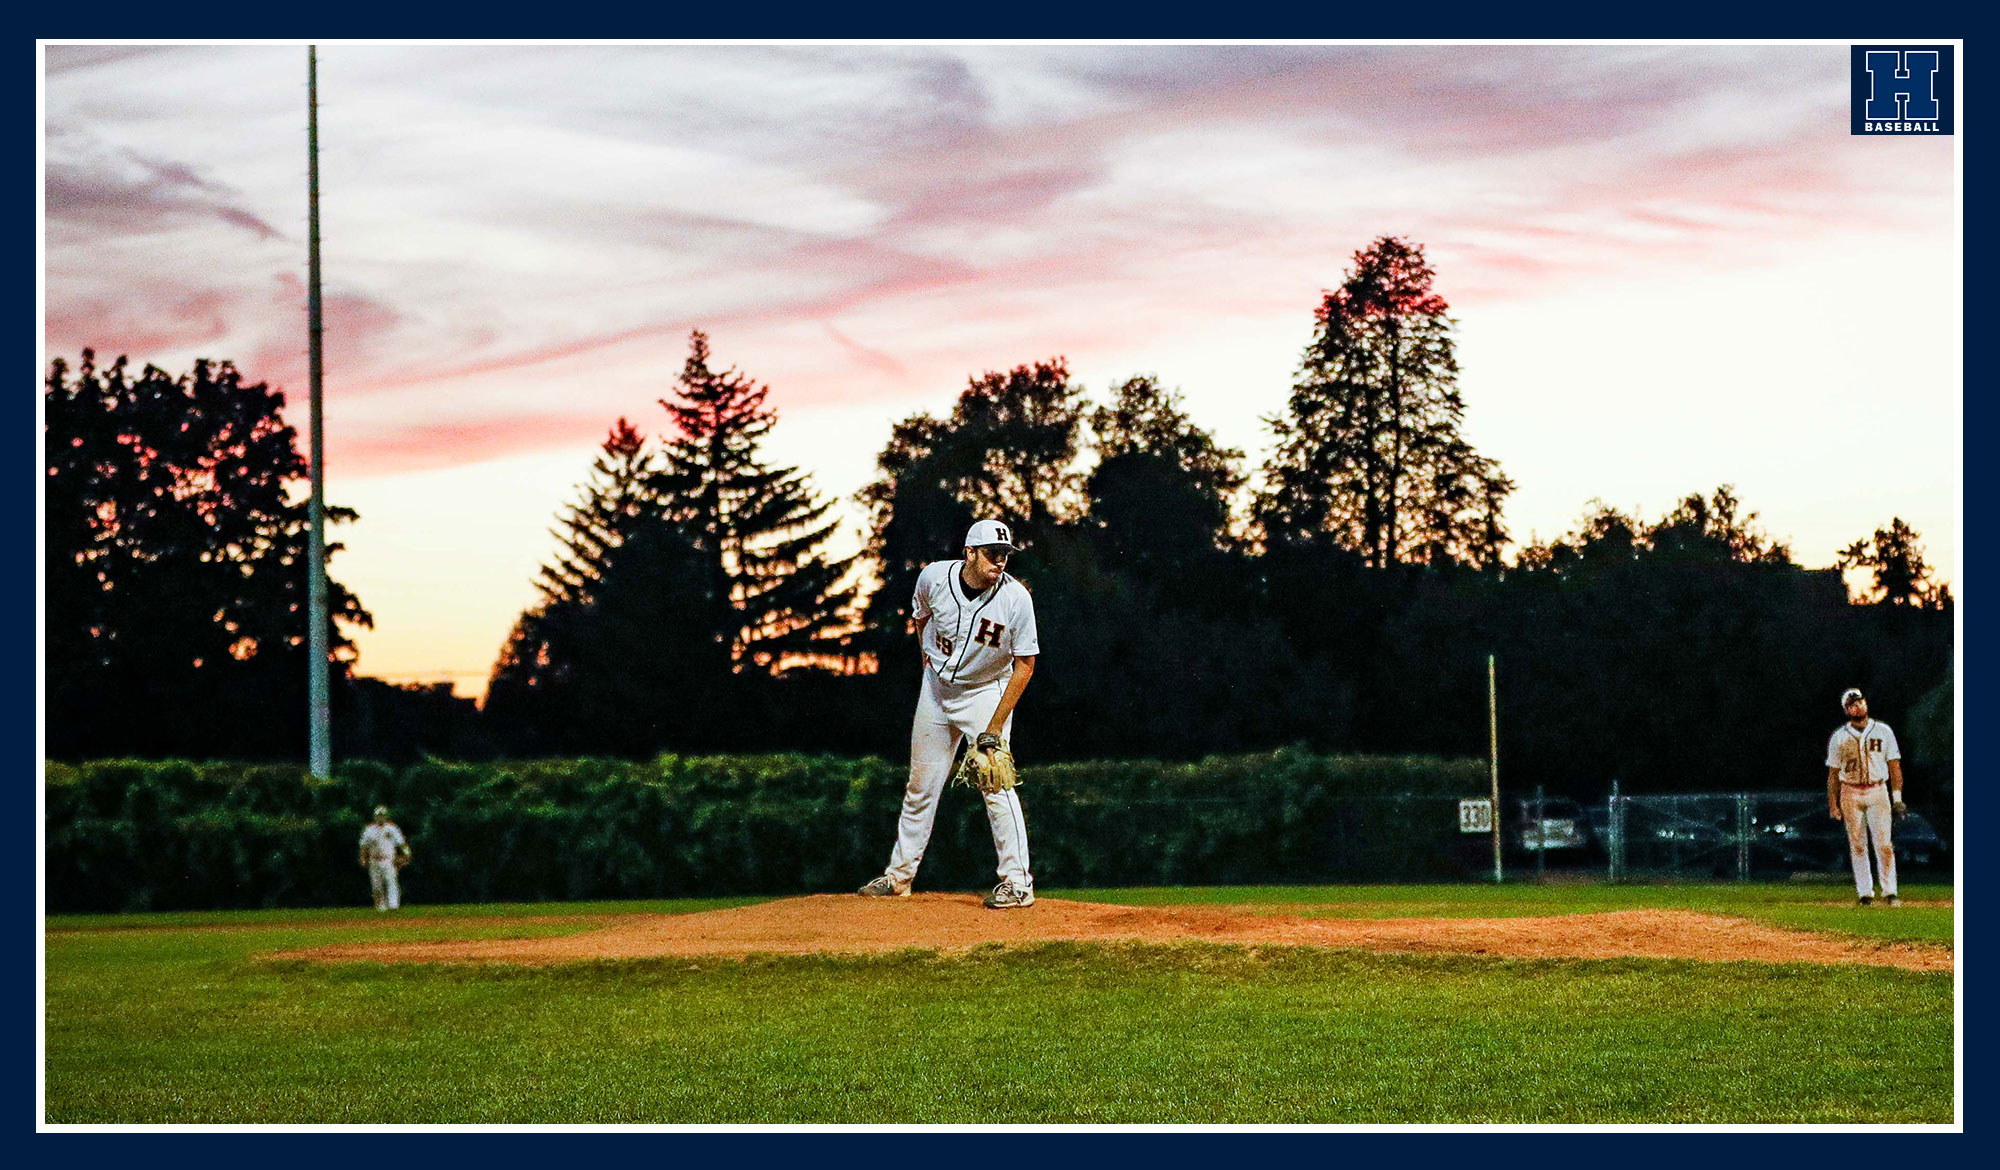 Humber baseball pitching with a nice skyline